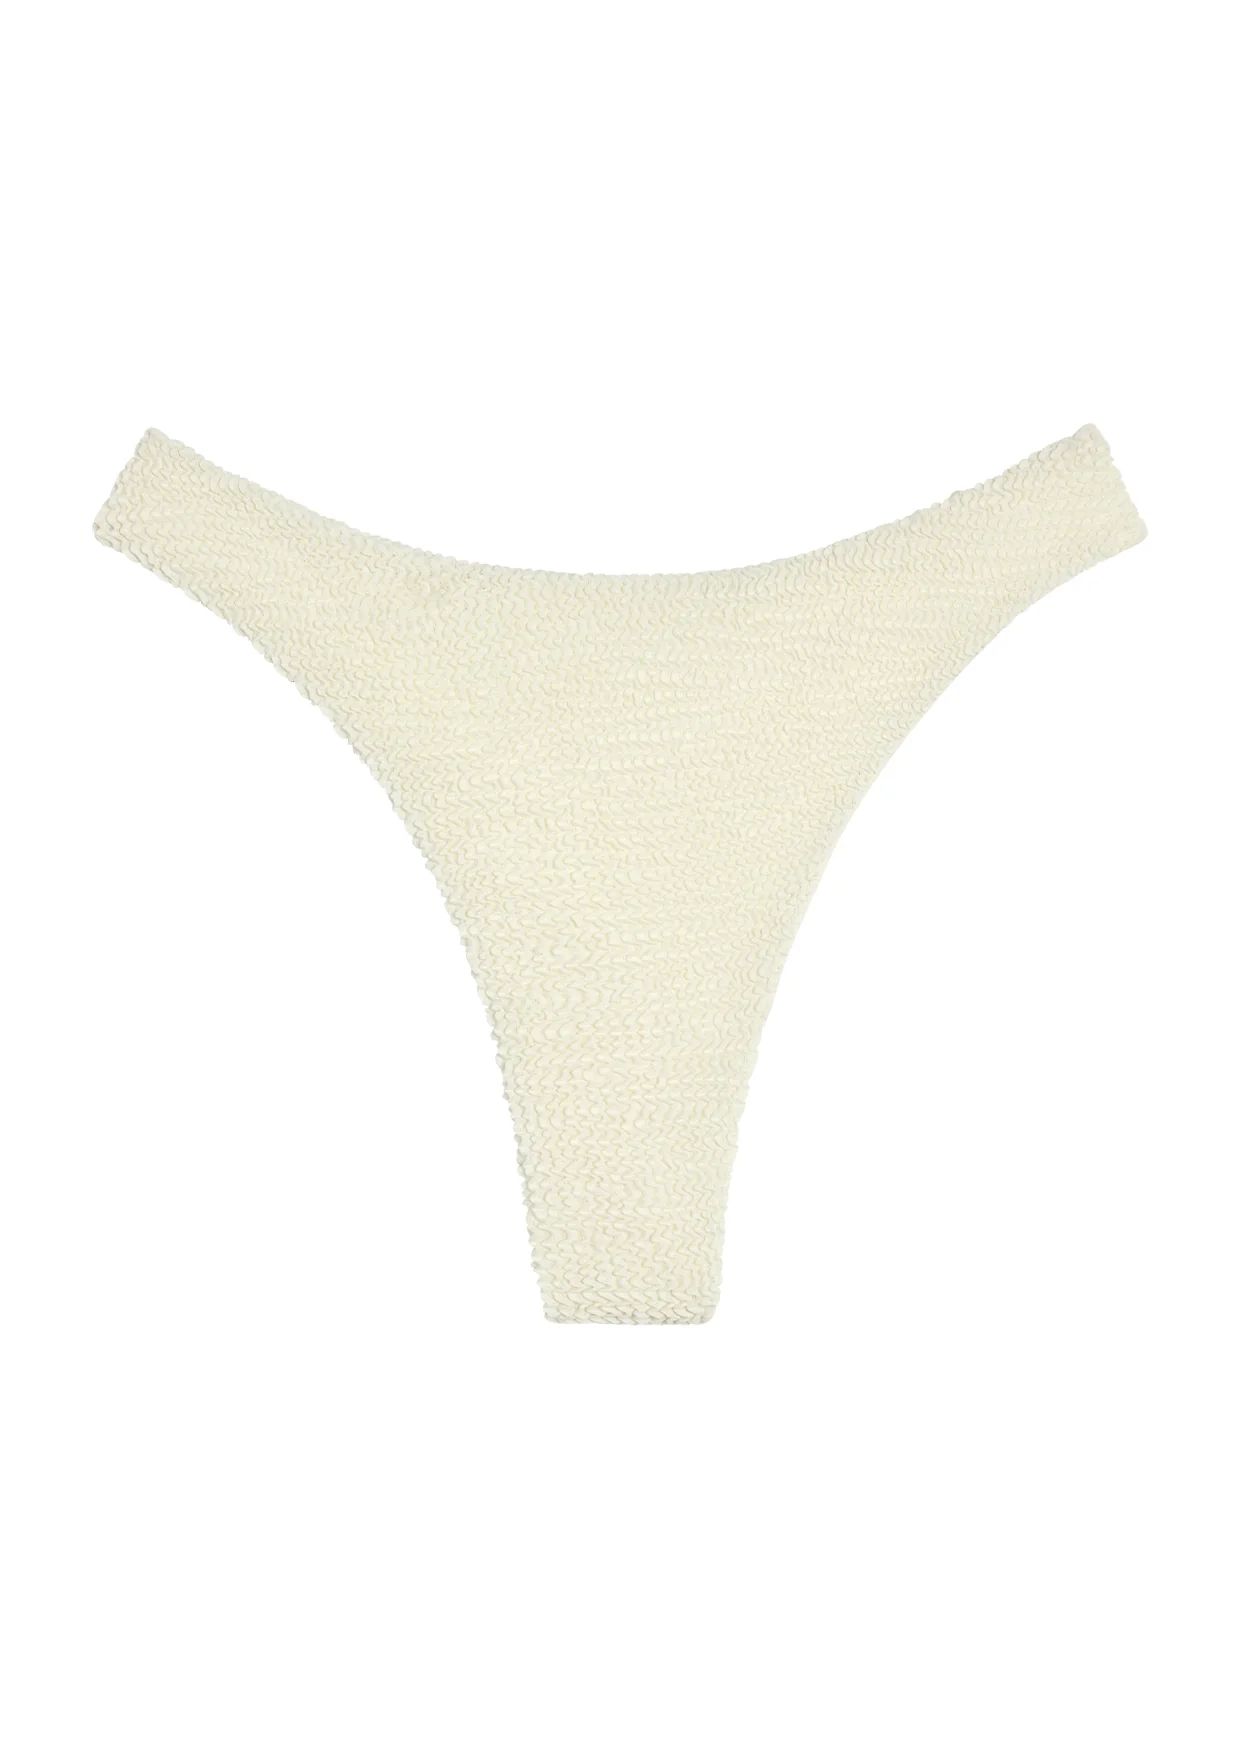 Capri Thong - Ivory Crinkle | Monday Swimwear